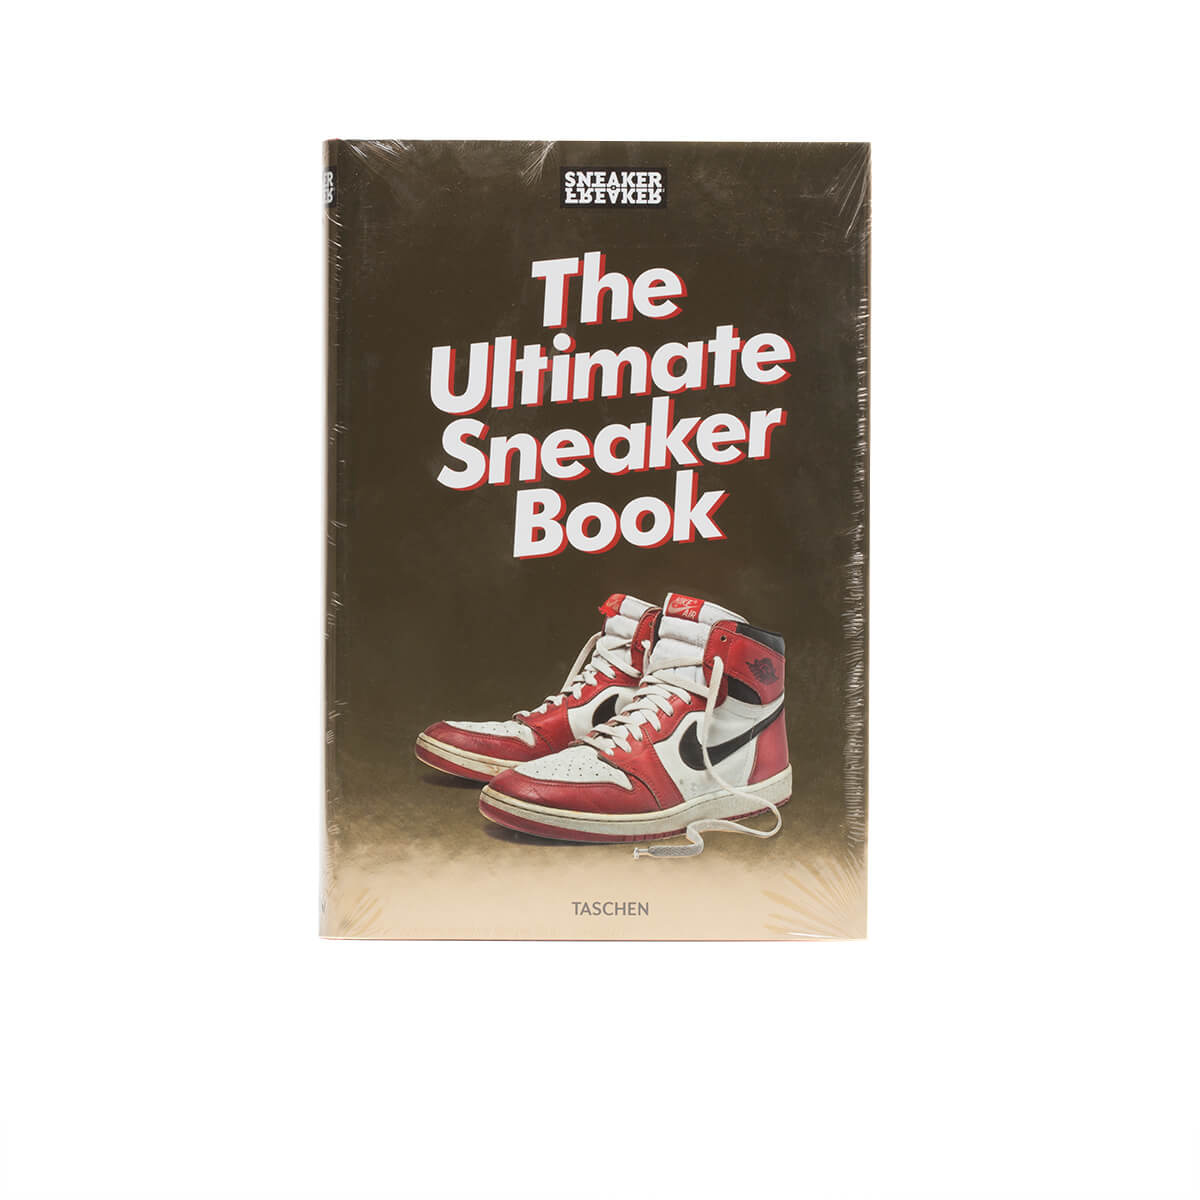 TASCHEN The Ultimate Sneaker Book